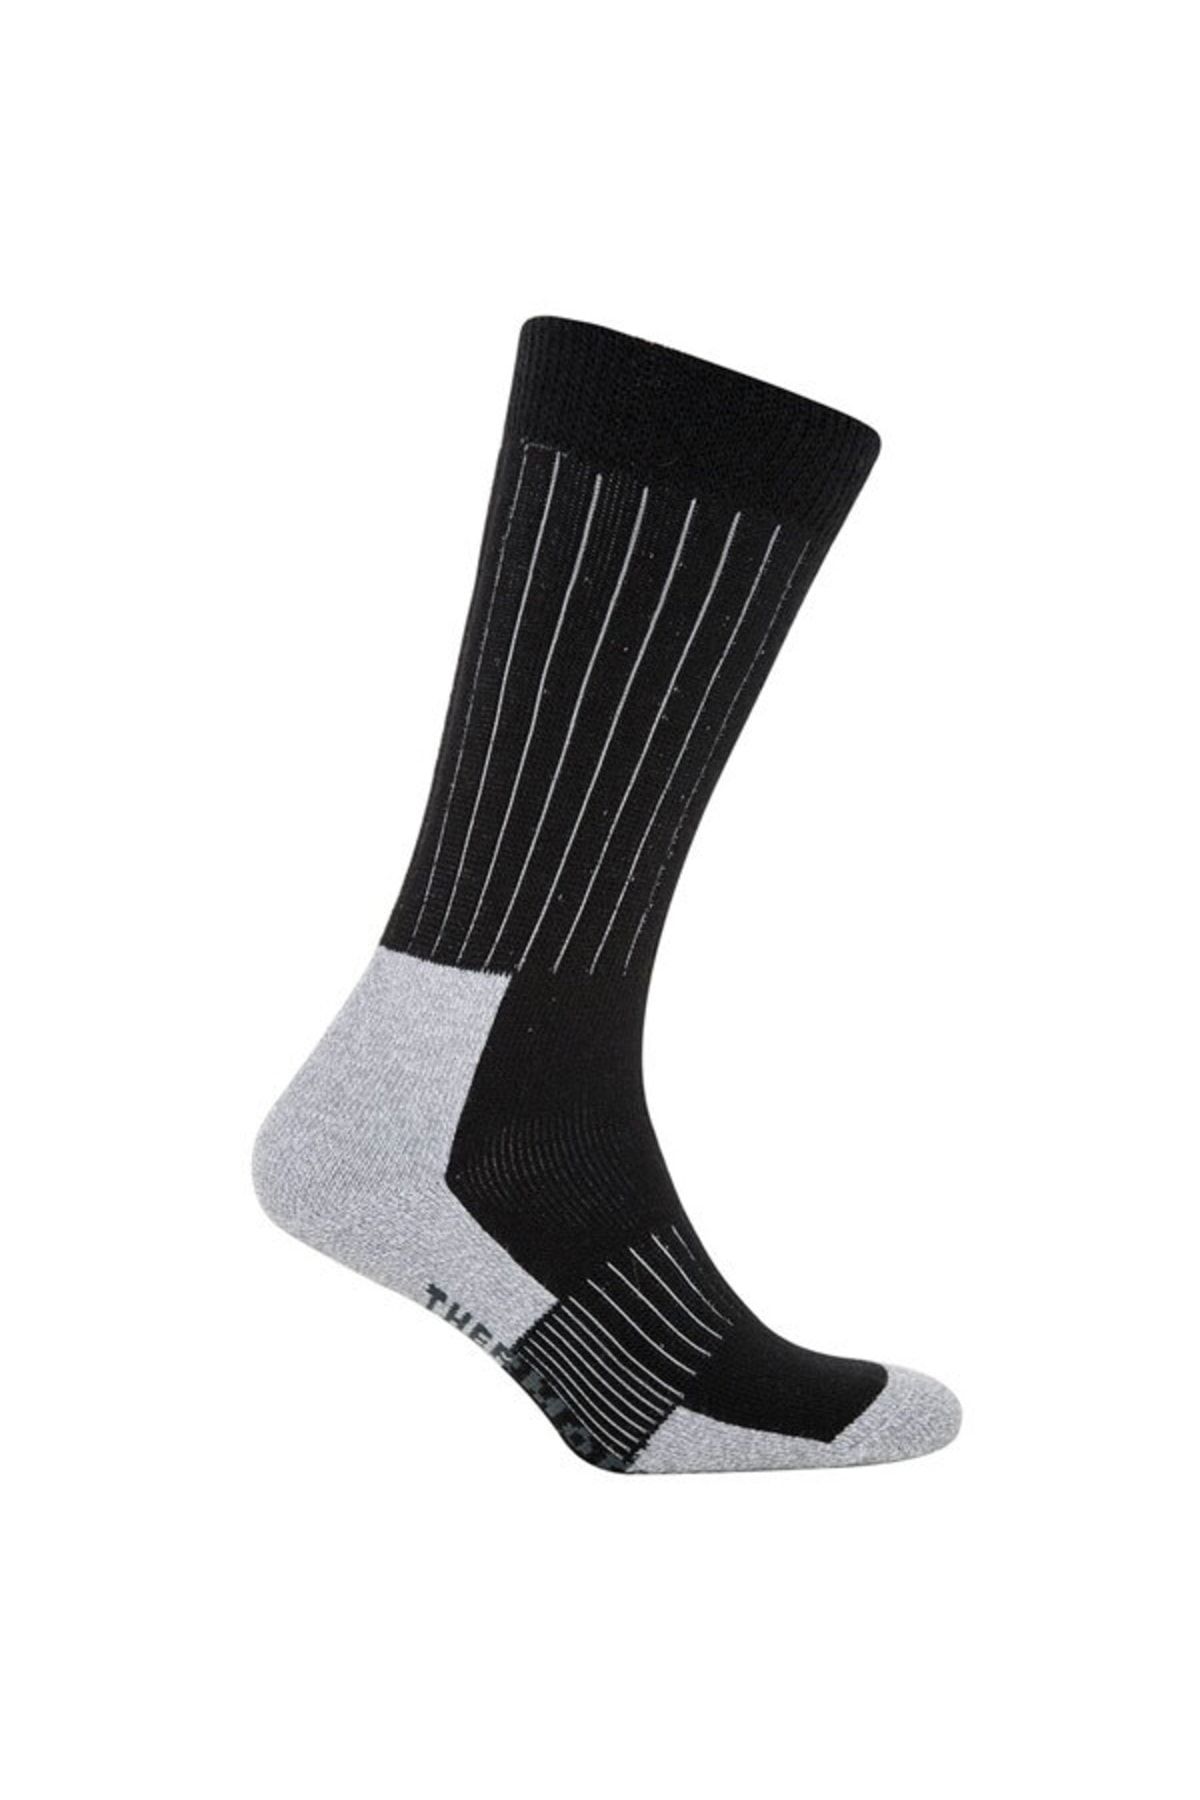 SAVAGE Hzts19 Extreme Çorap Siyah 39-42